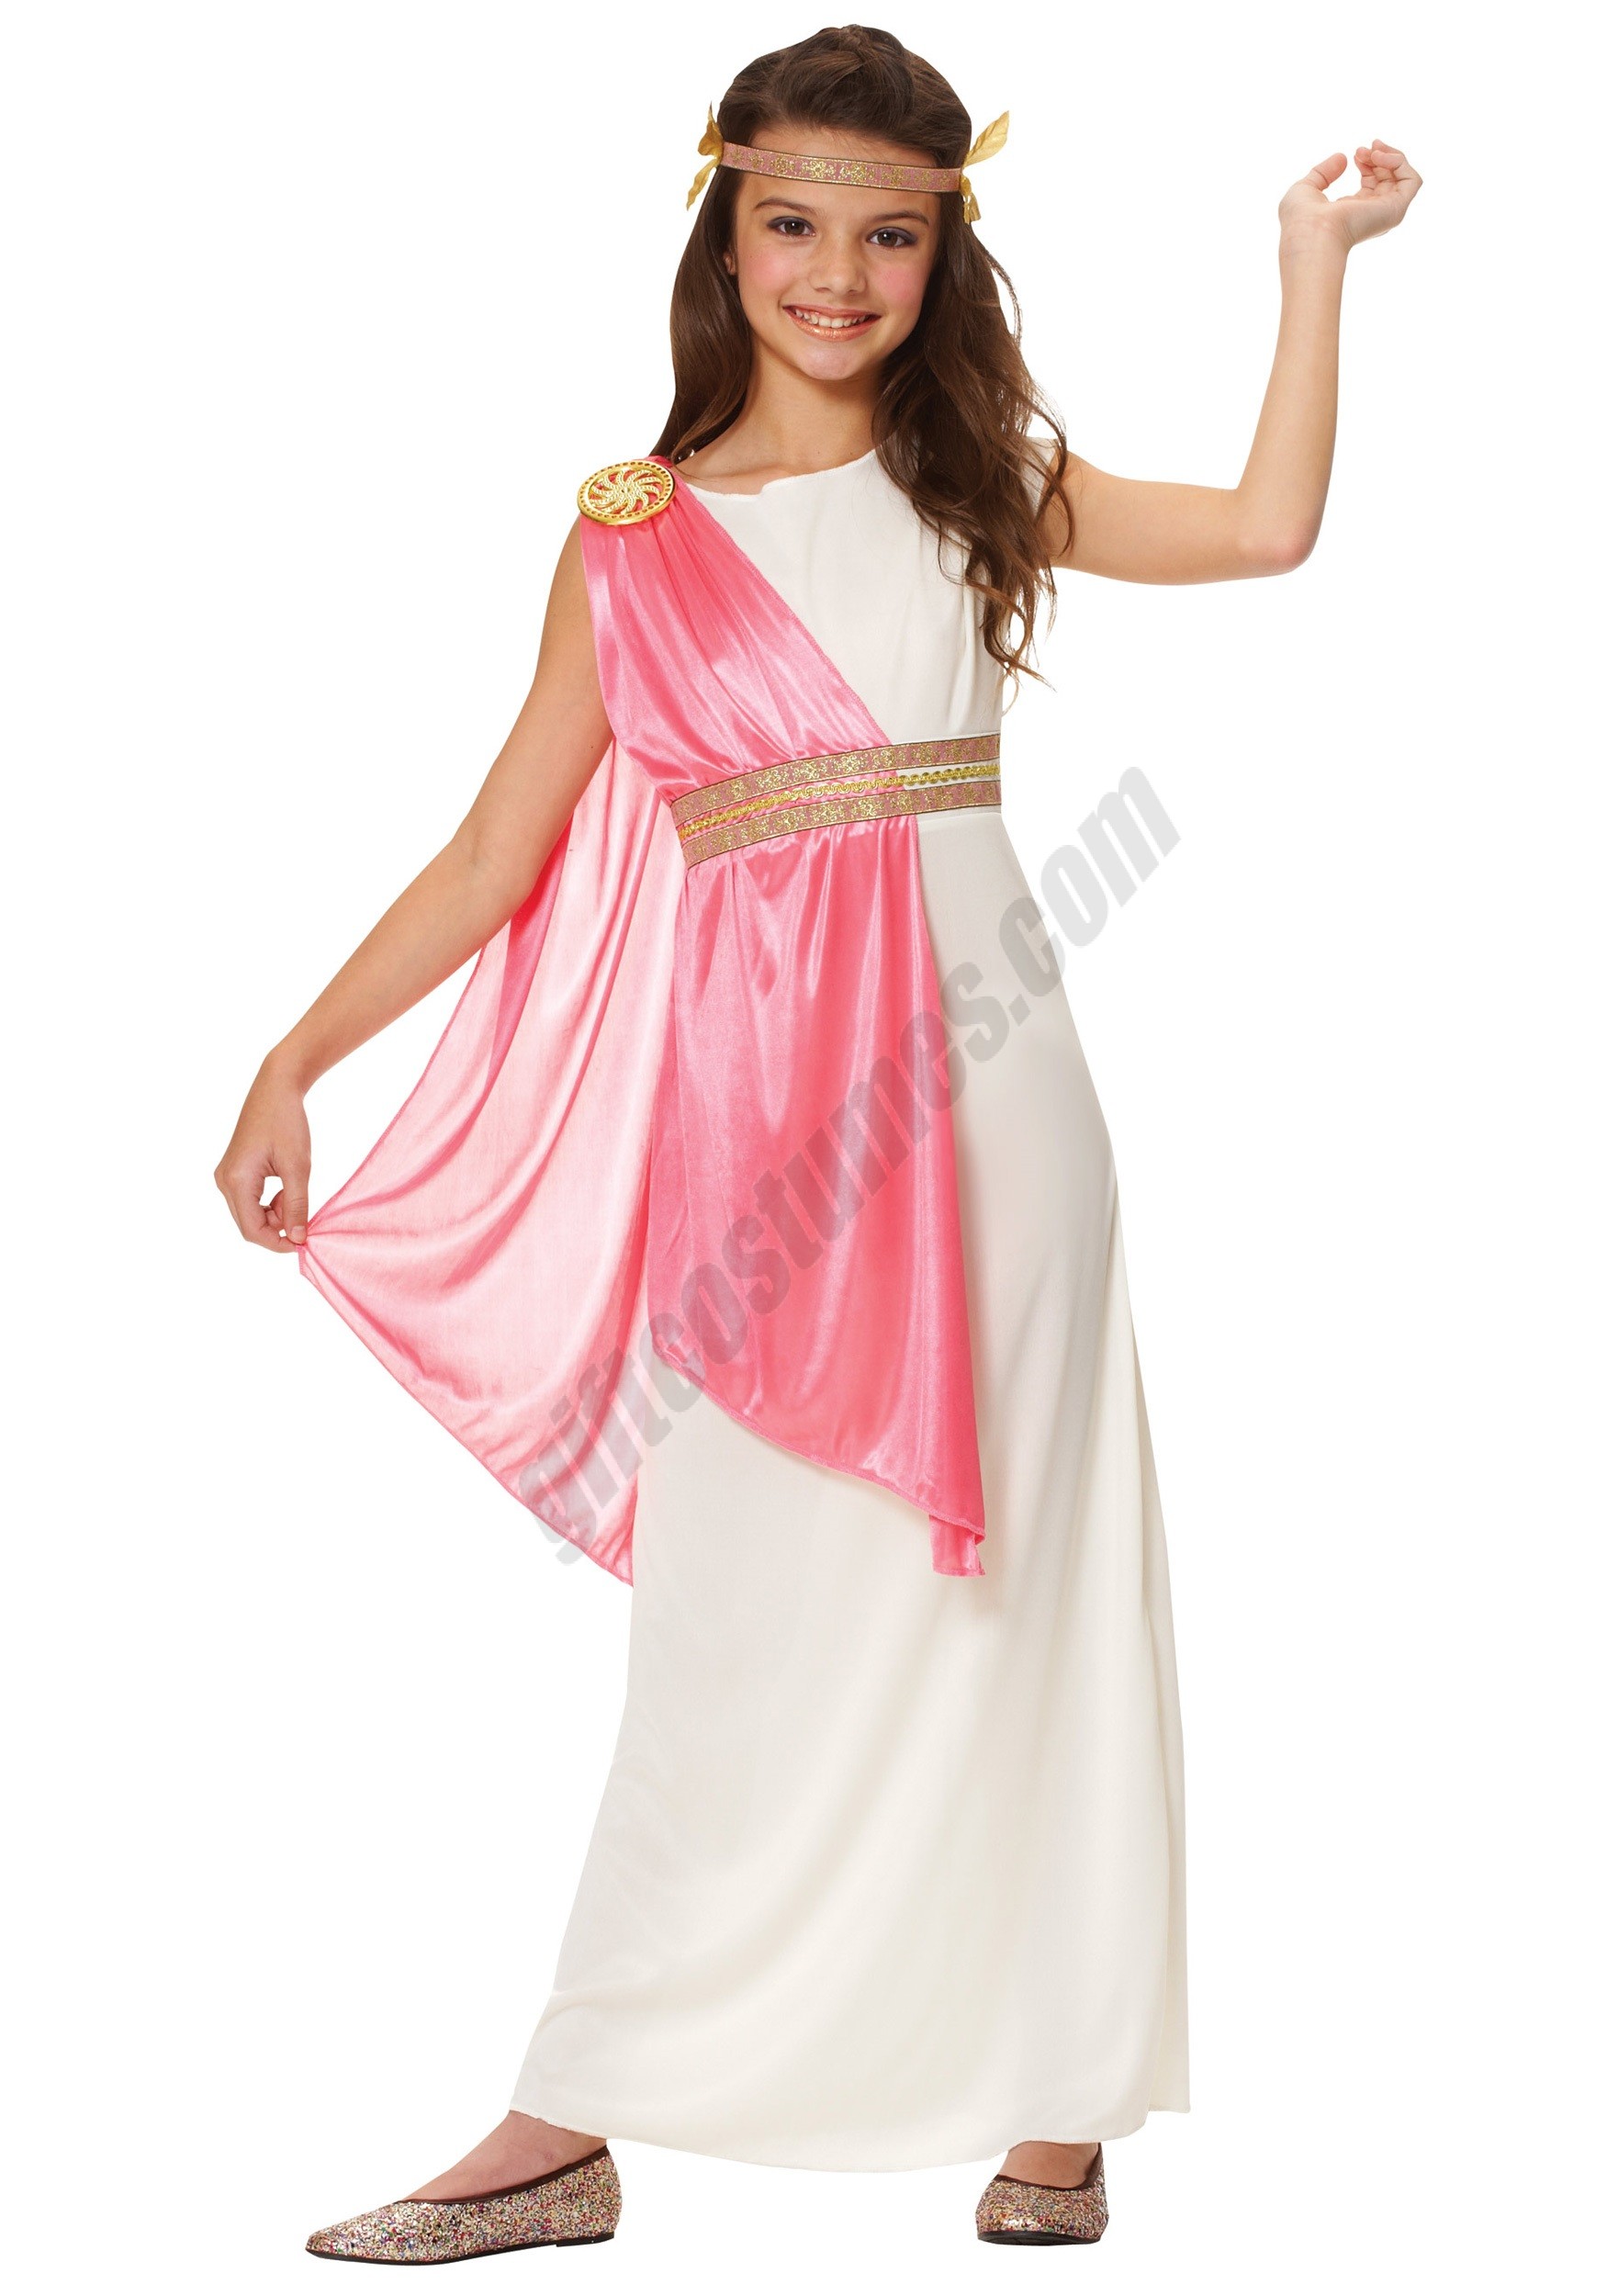 Ancient Roman Empress Costume Promotions - Ancient Roman Empress Costume Promotions